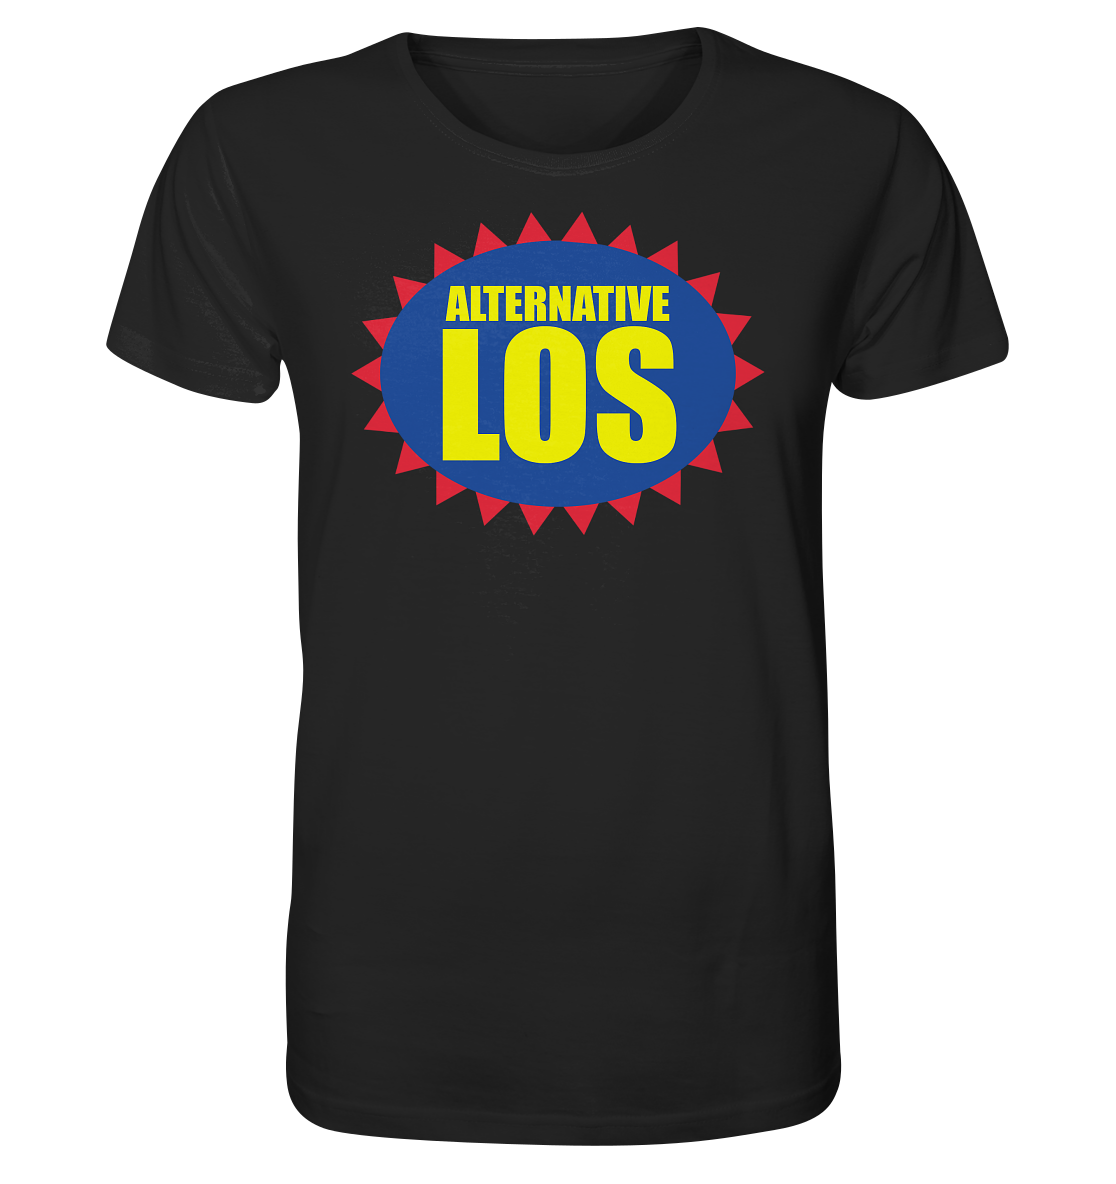 ALTERNATIVE LOS LOGO - Organic Shirt